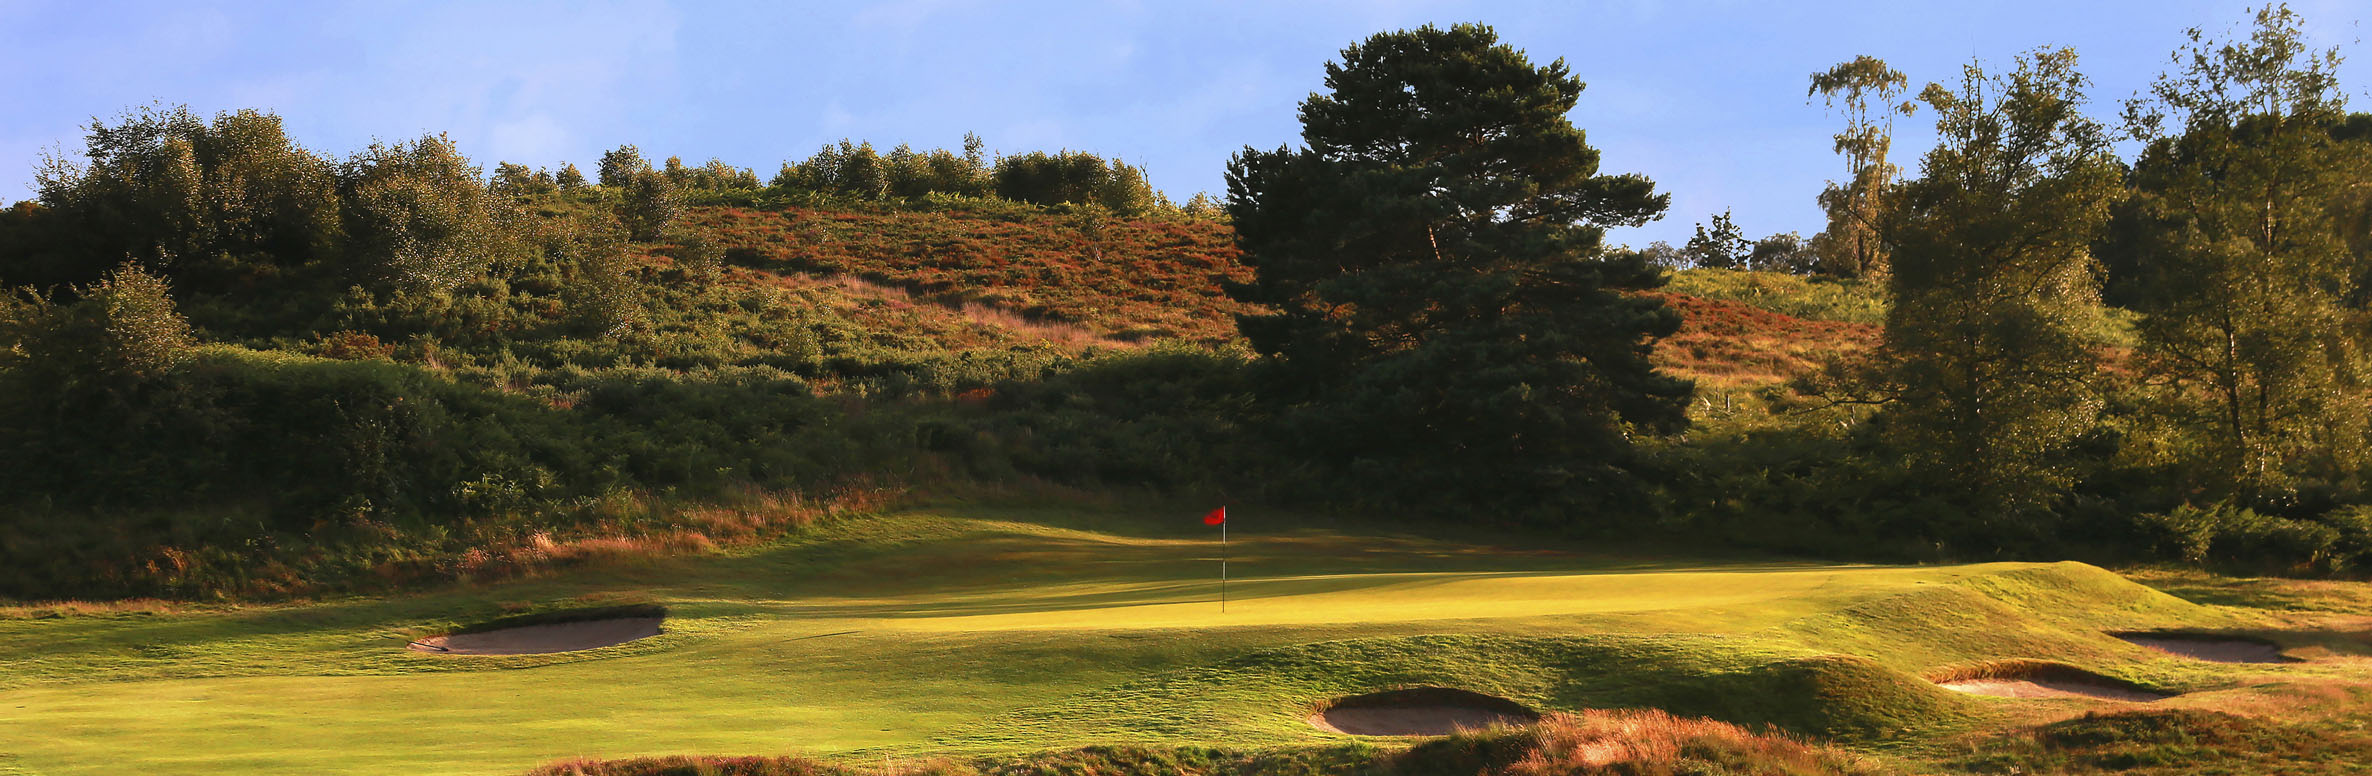 Golf Course Image - Broadstone Golf Club No. 11